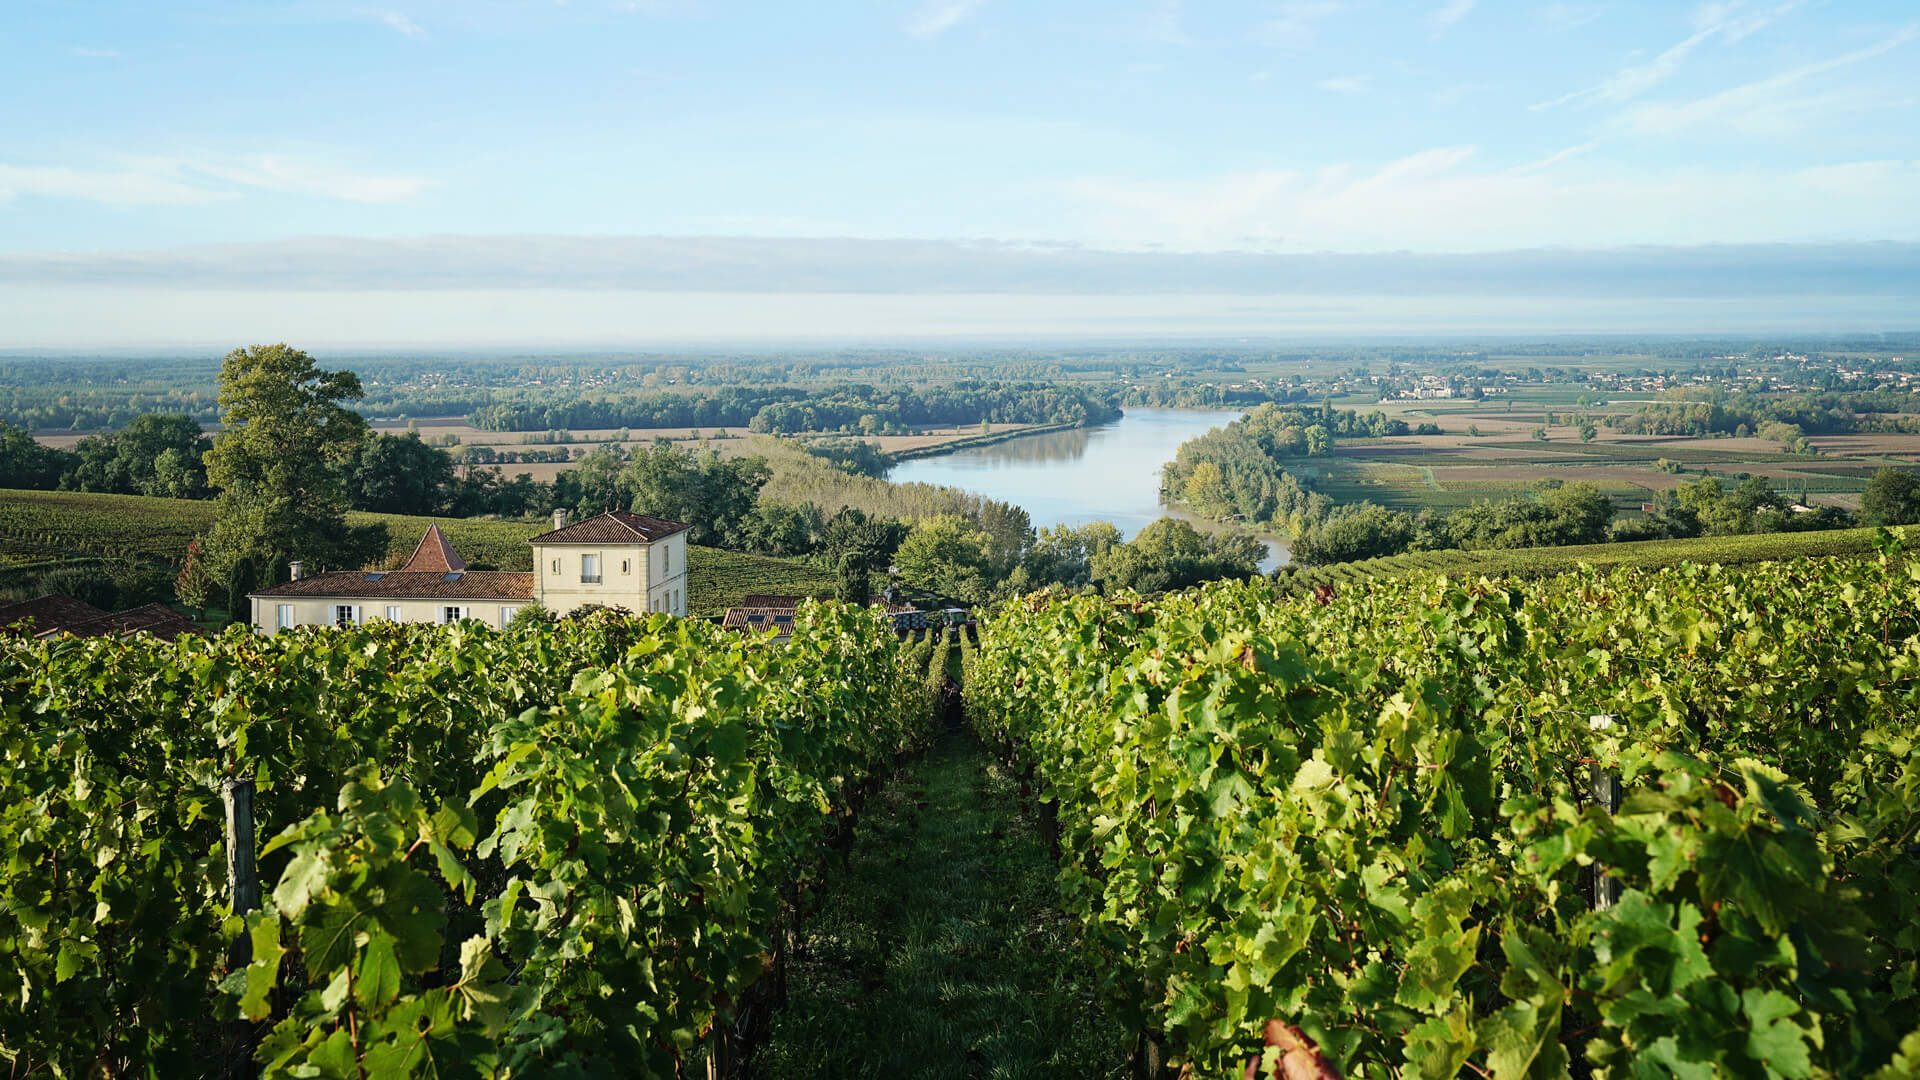 Kelham Vineyards & Winery Cover Image